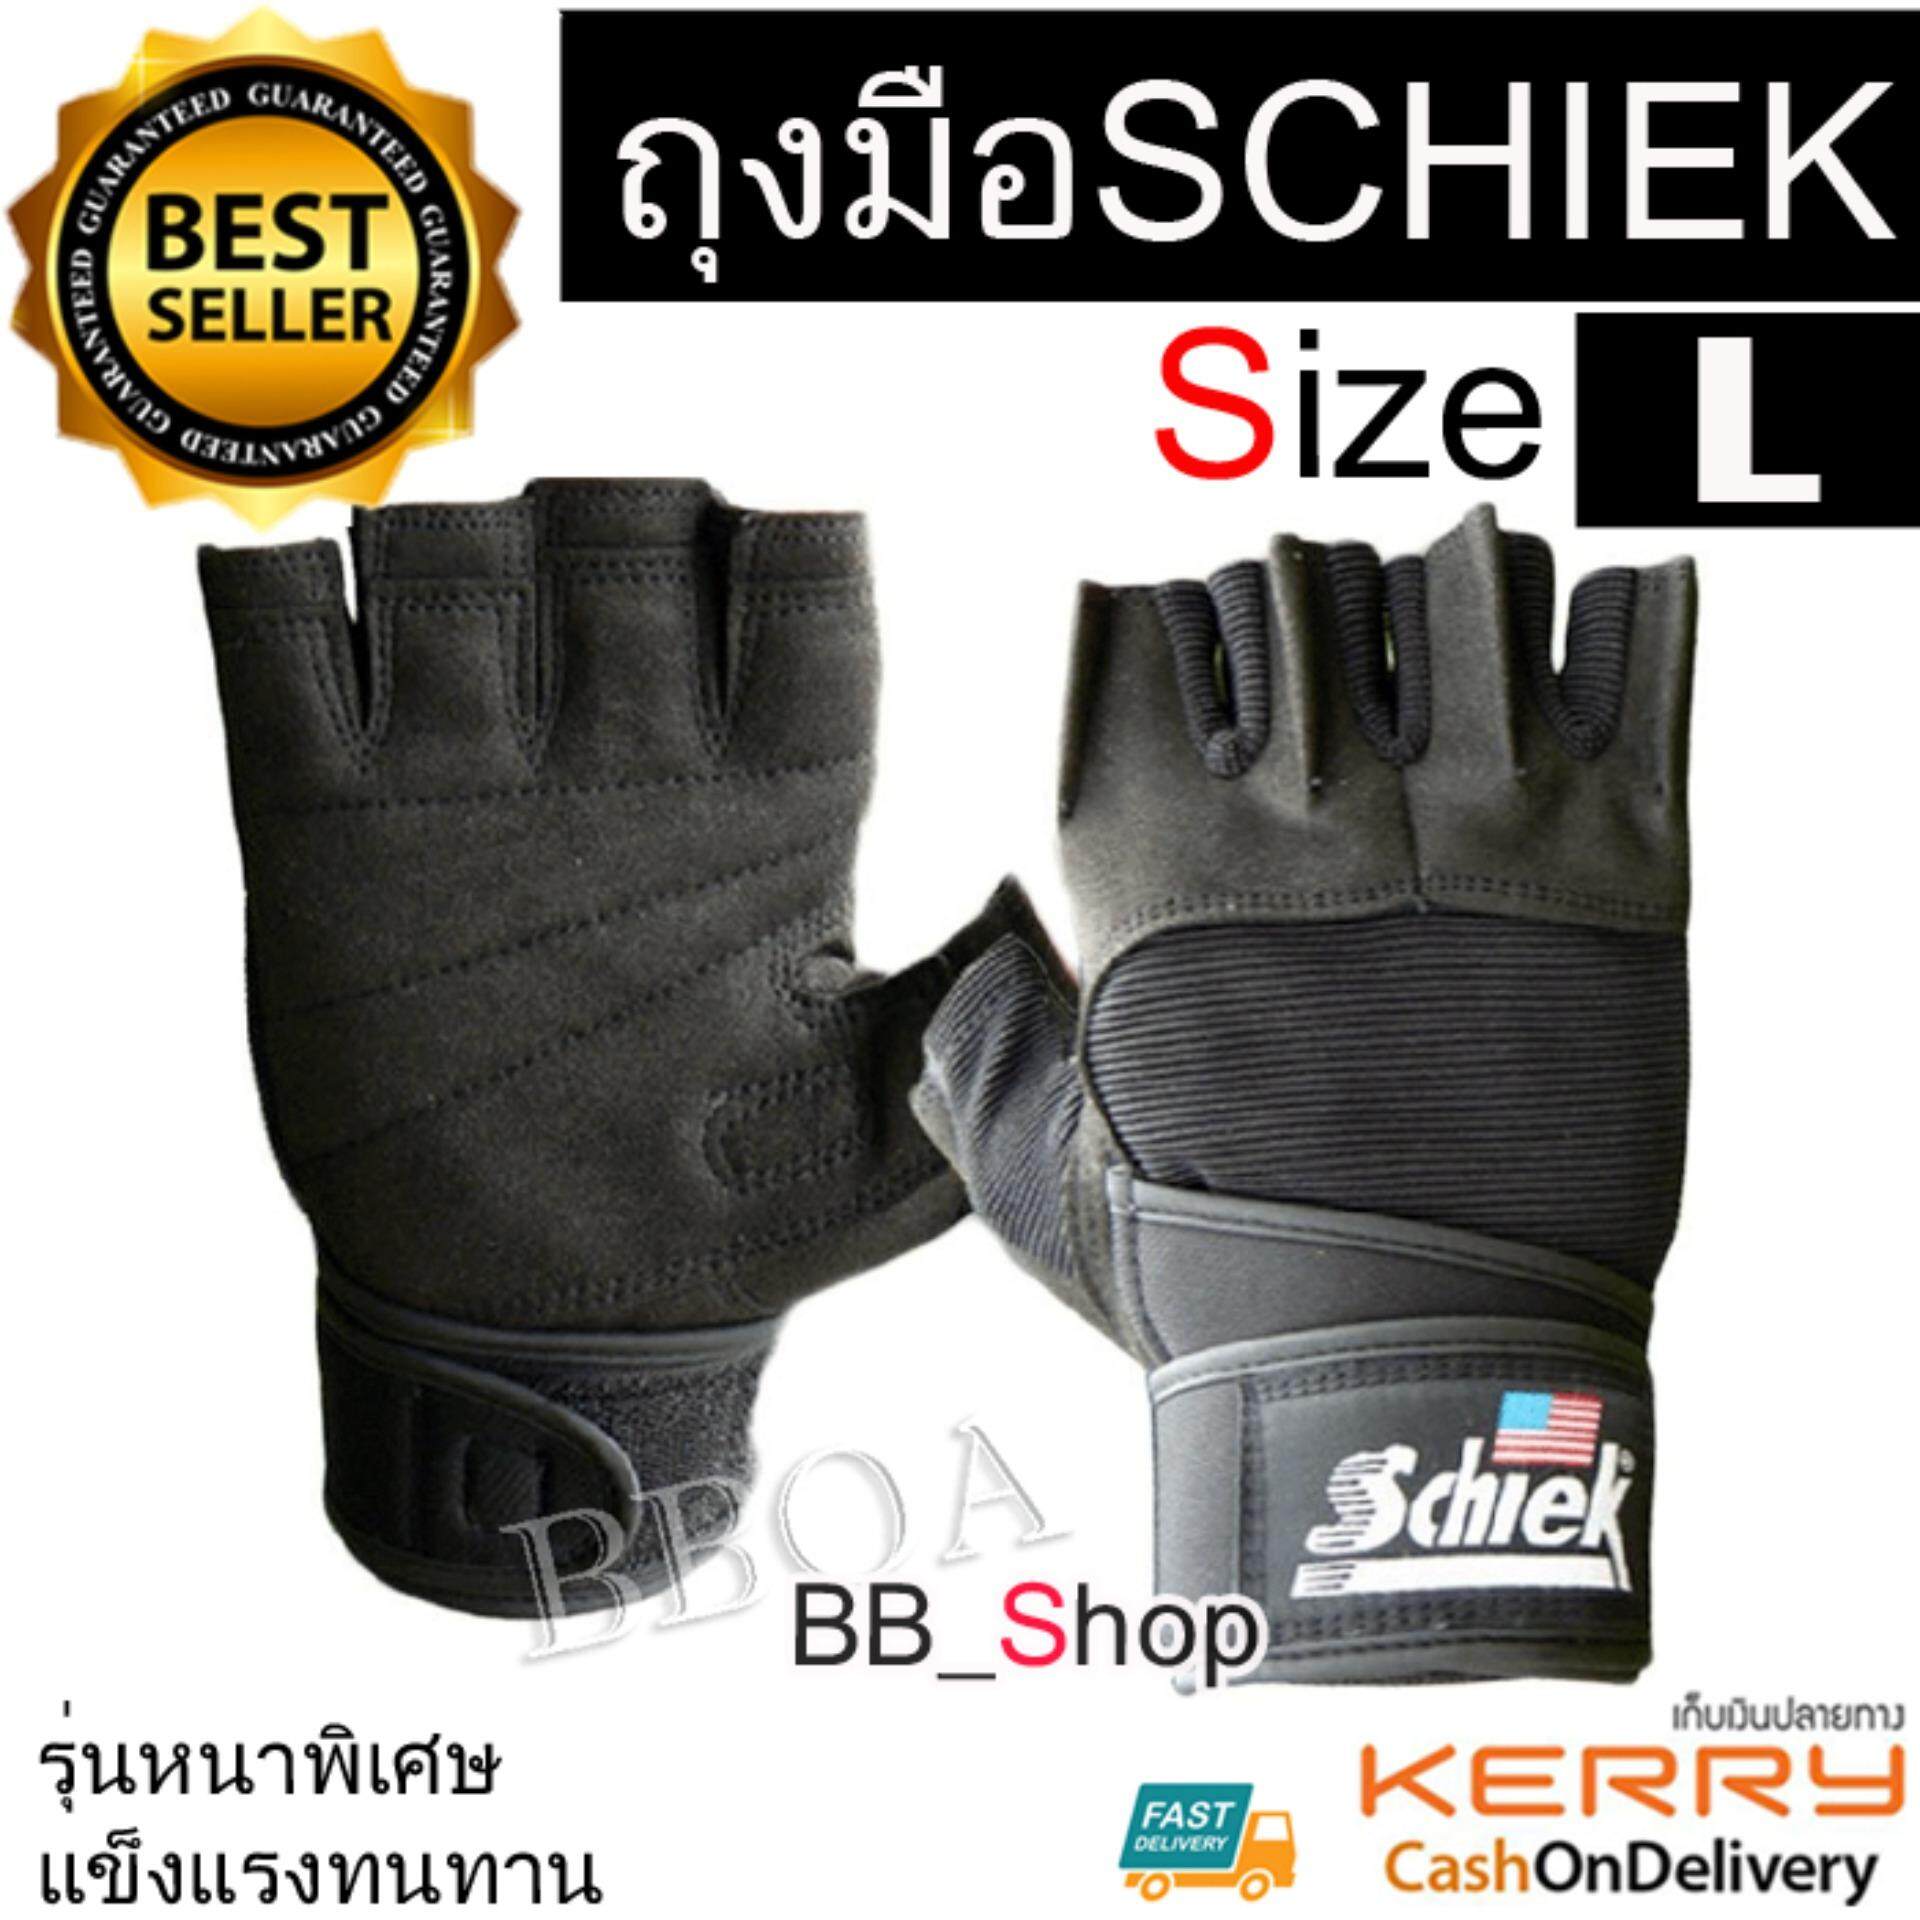 Schiek ถุงมือ ยกน้ำหนัก ถุงมือฟิตเนส Fitness Glove size L (Black) รุ่นหนา